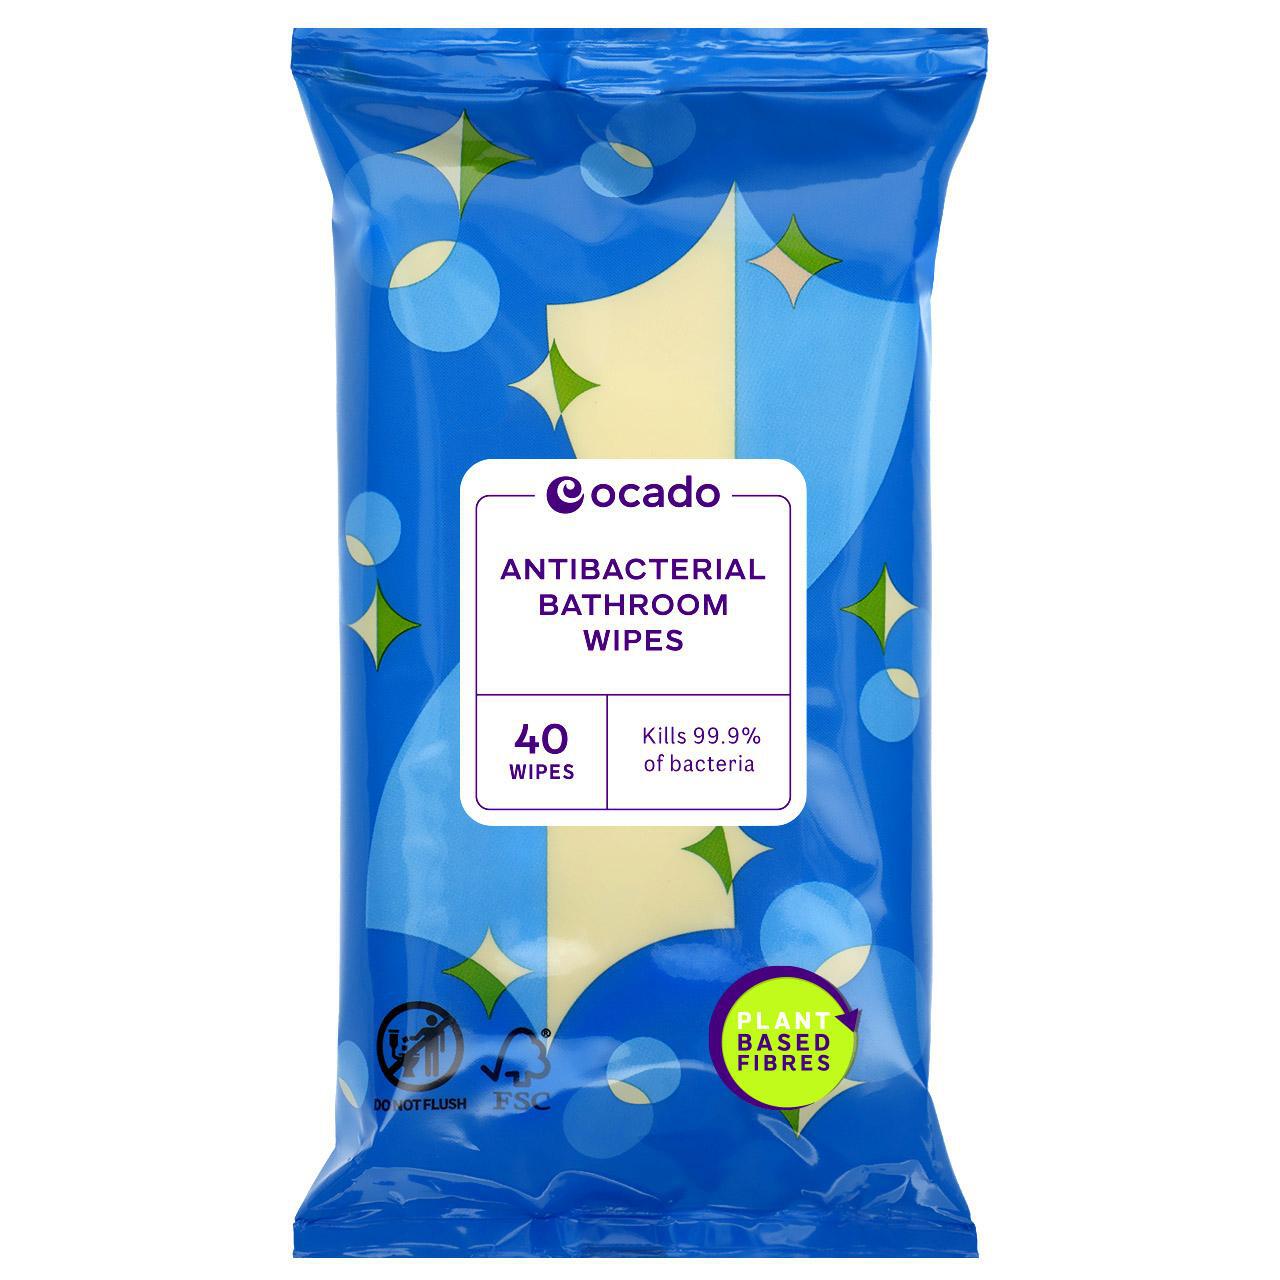 Ocado Antibacterial Bathroom Wipes 40 per pack